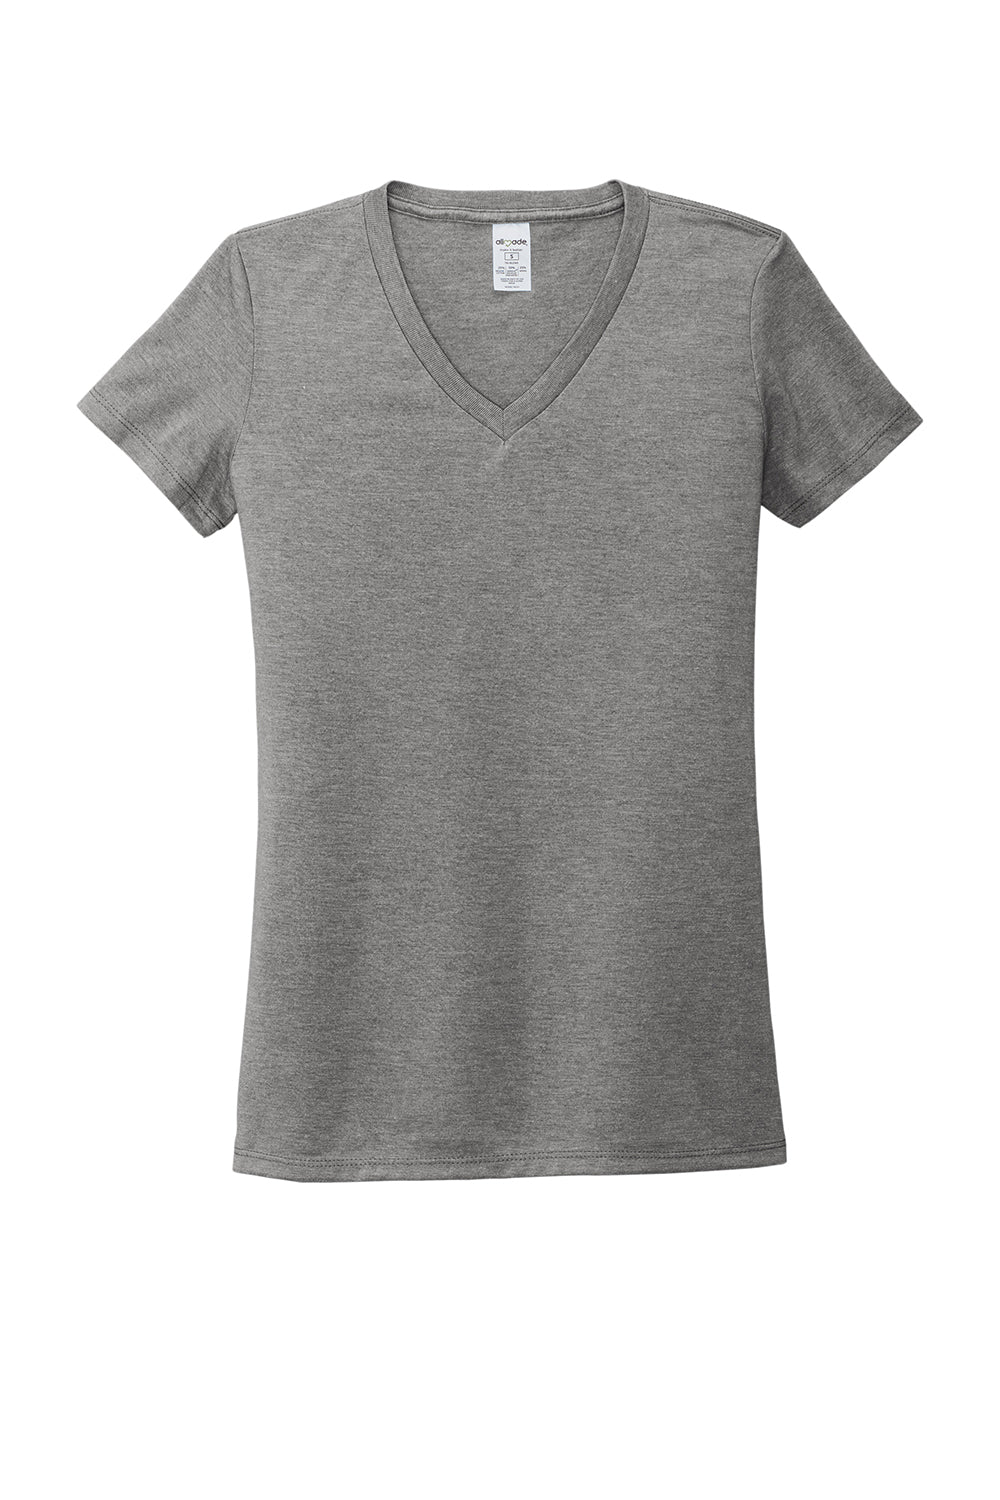 Allmade AL2018 Womens Short Sleeve V-Neck T-Shirt Aluminum Grey Flat Front